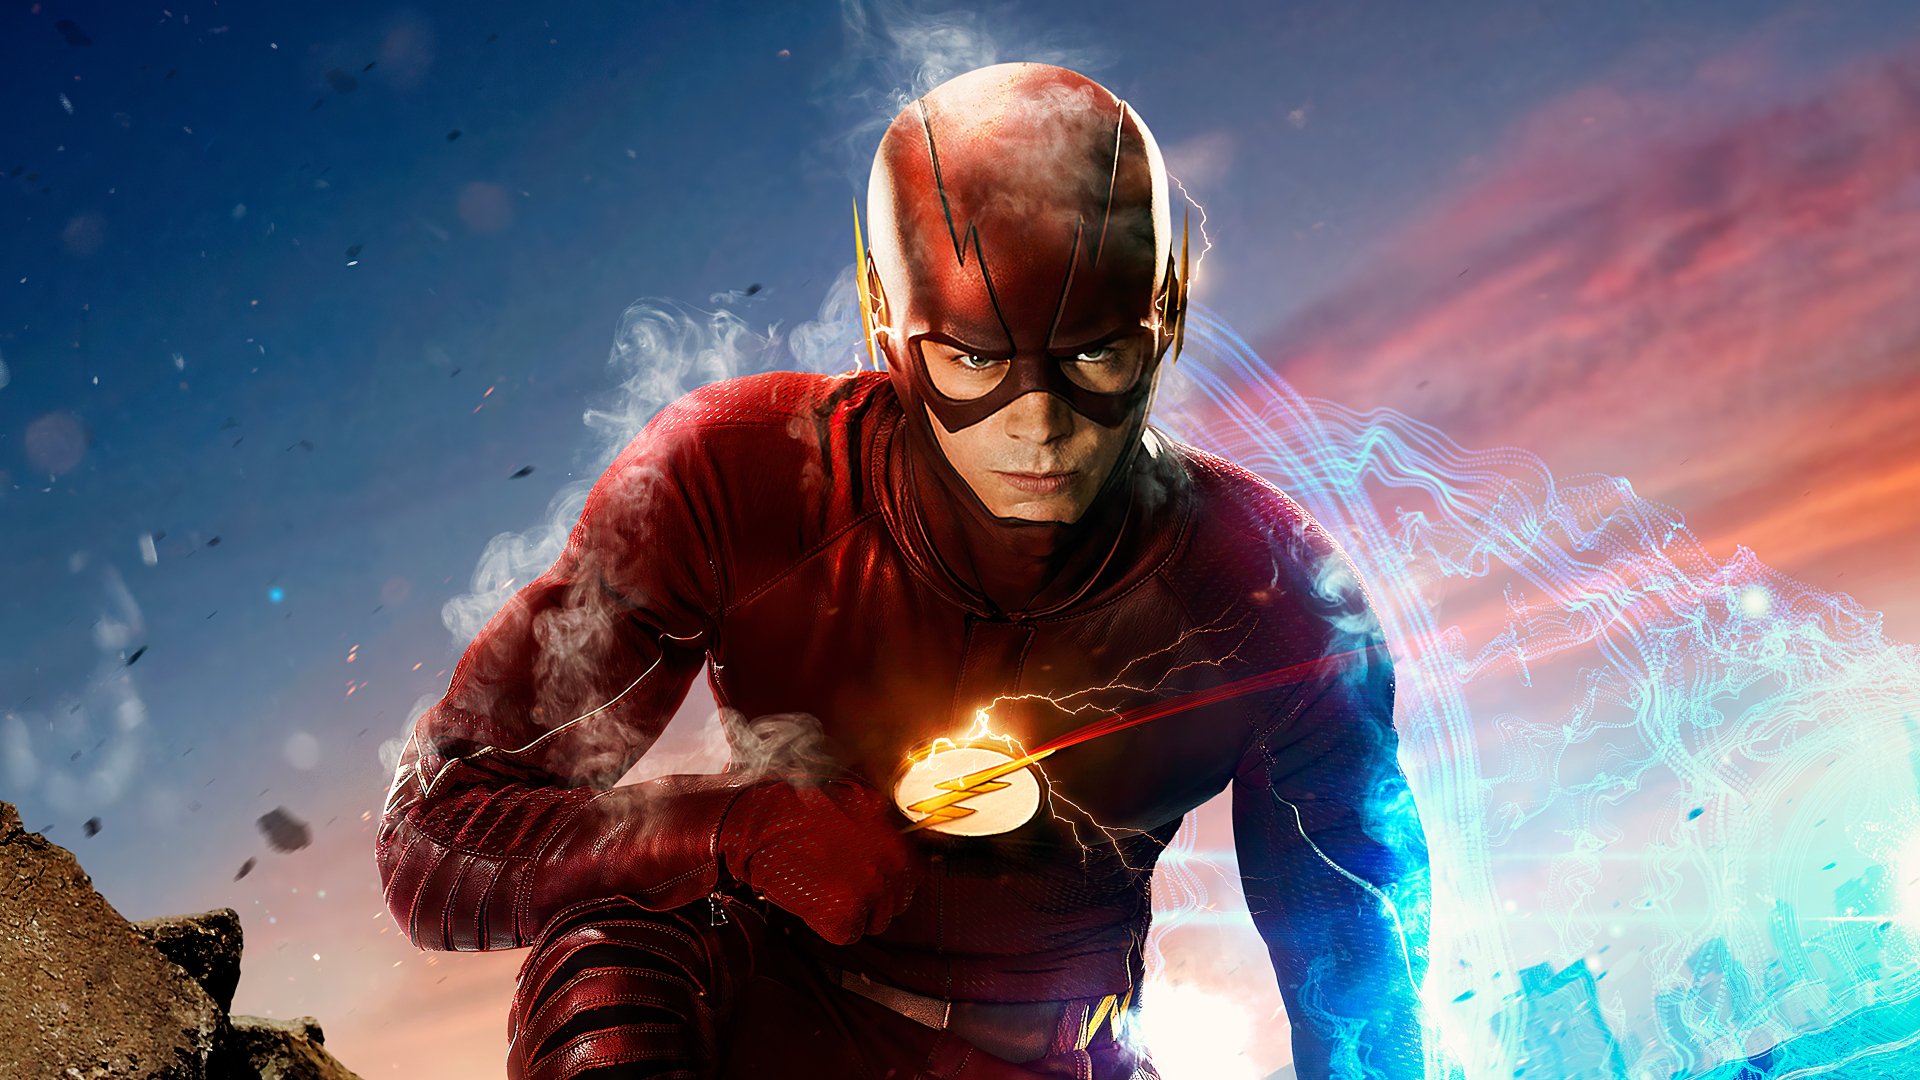 Download Grant Gustin Barry Allen TV Show The Flash (2014)  4k Ultra HD Wallpaper